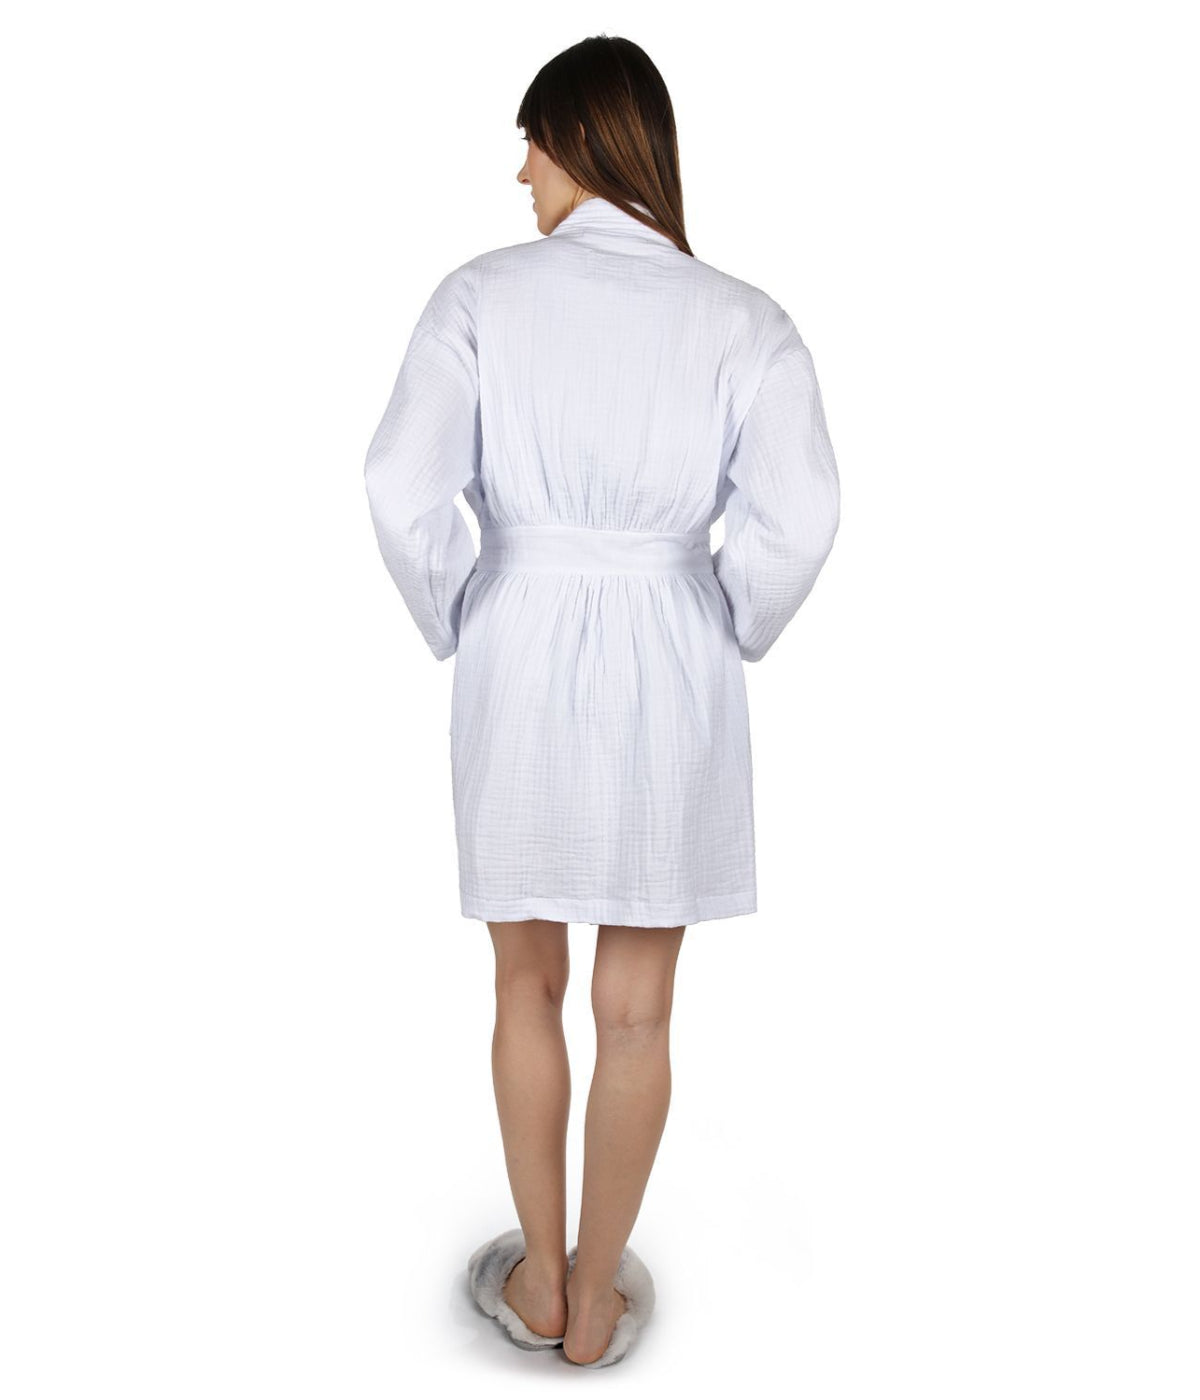 Women's 100% Cotton Woven Gauze Short Kimono Robe White